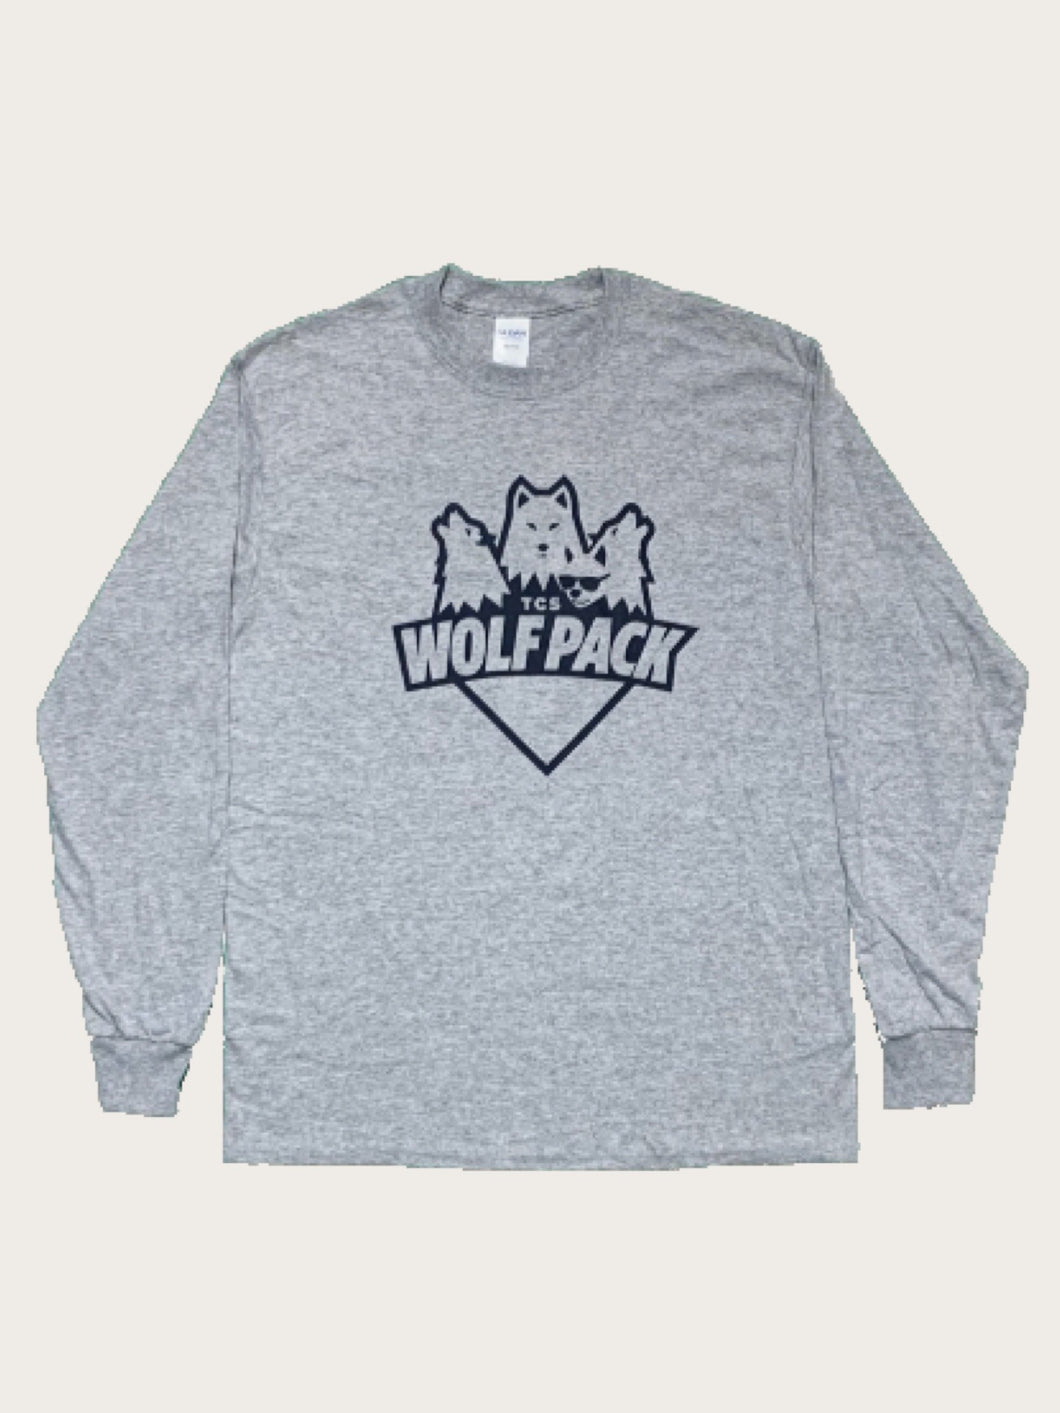 Longsleeve Shirt (Wolfpack)